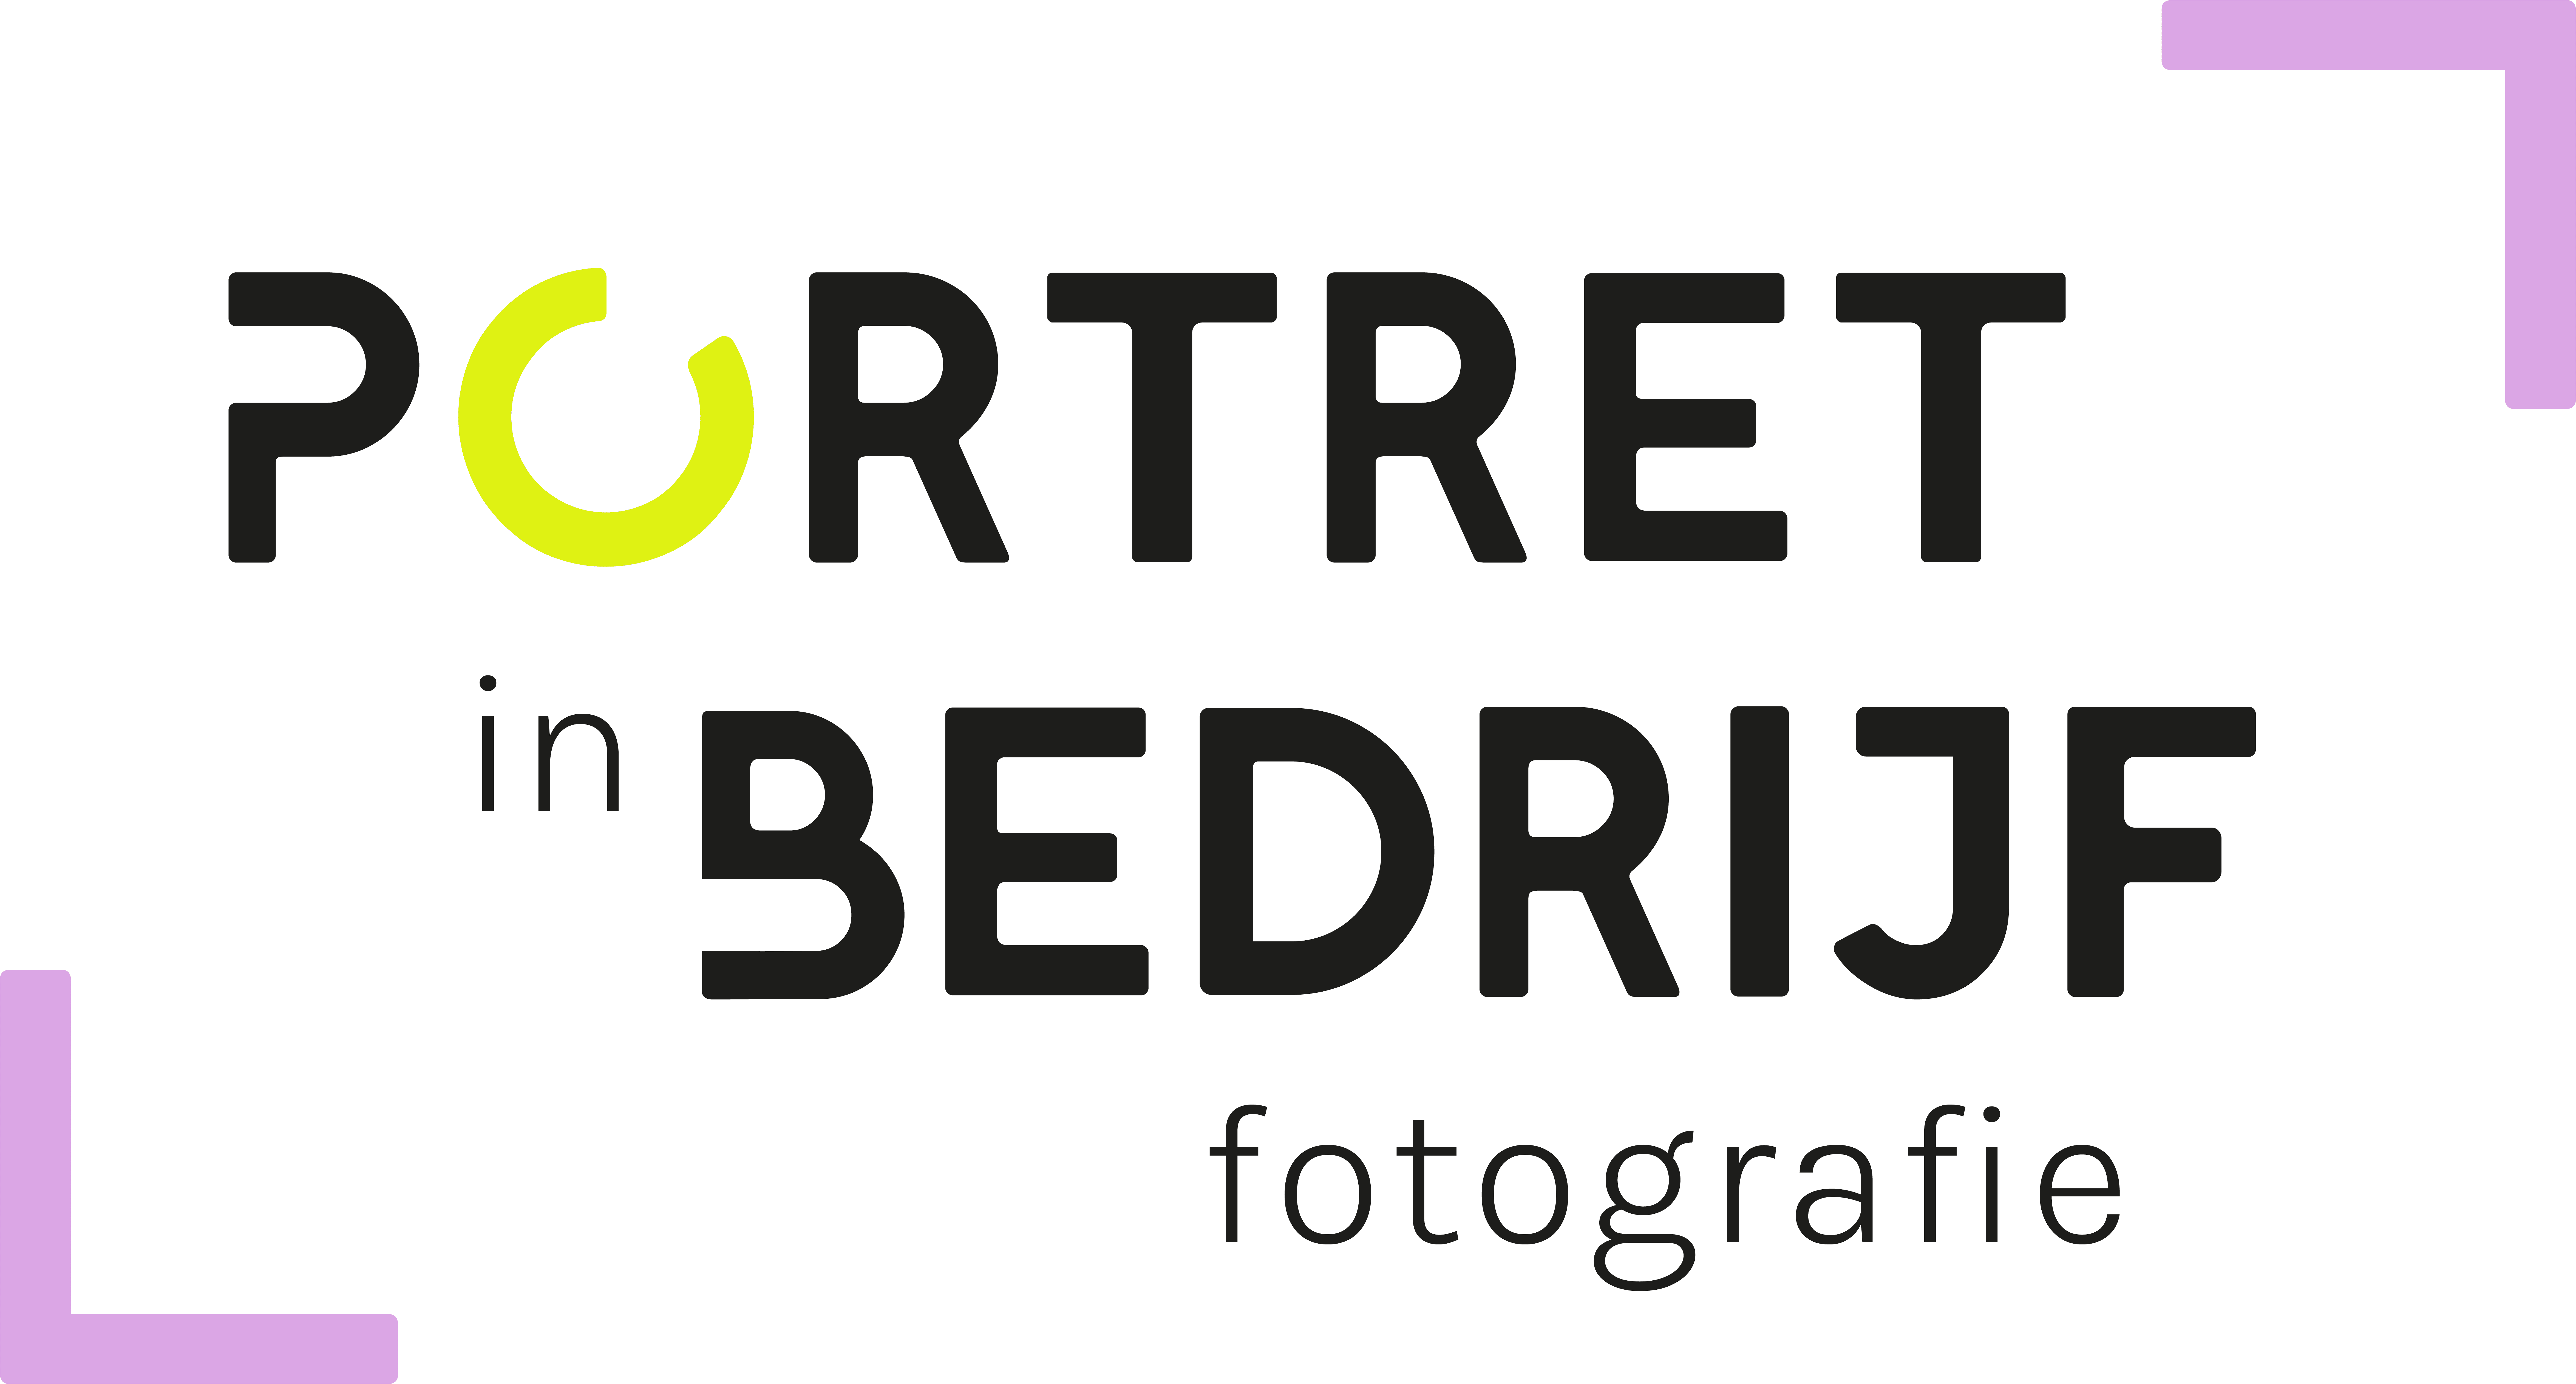 Bedrijfs- en portretfotografie